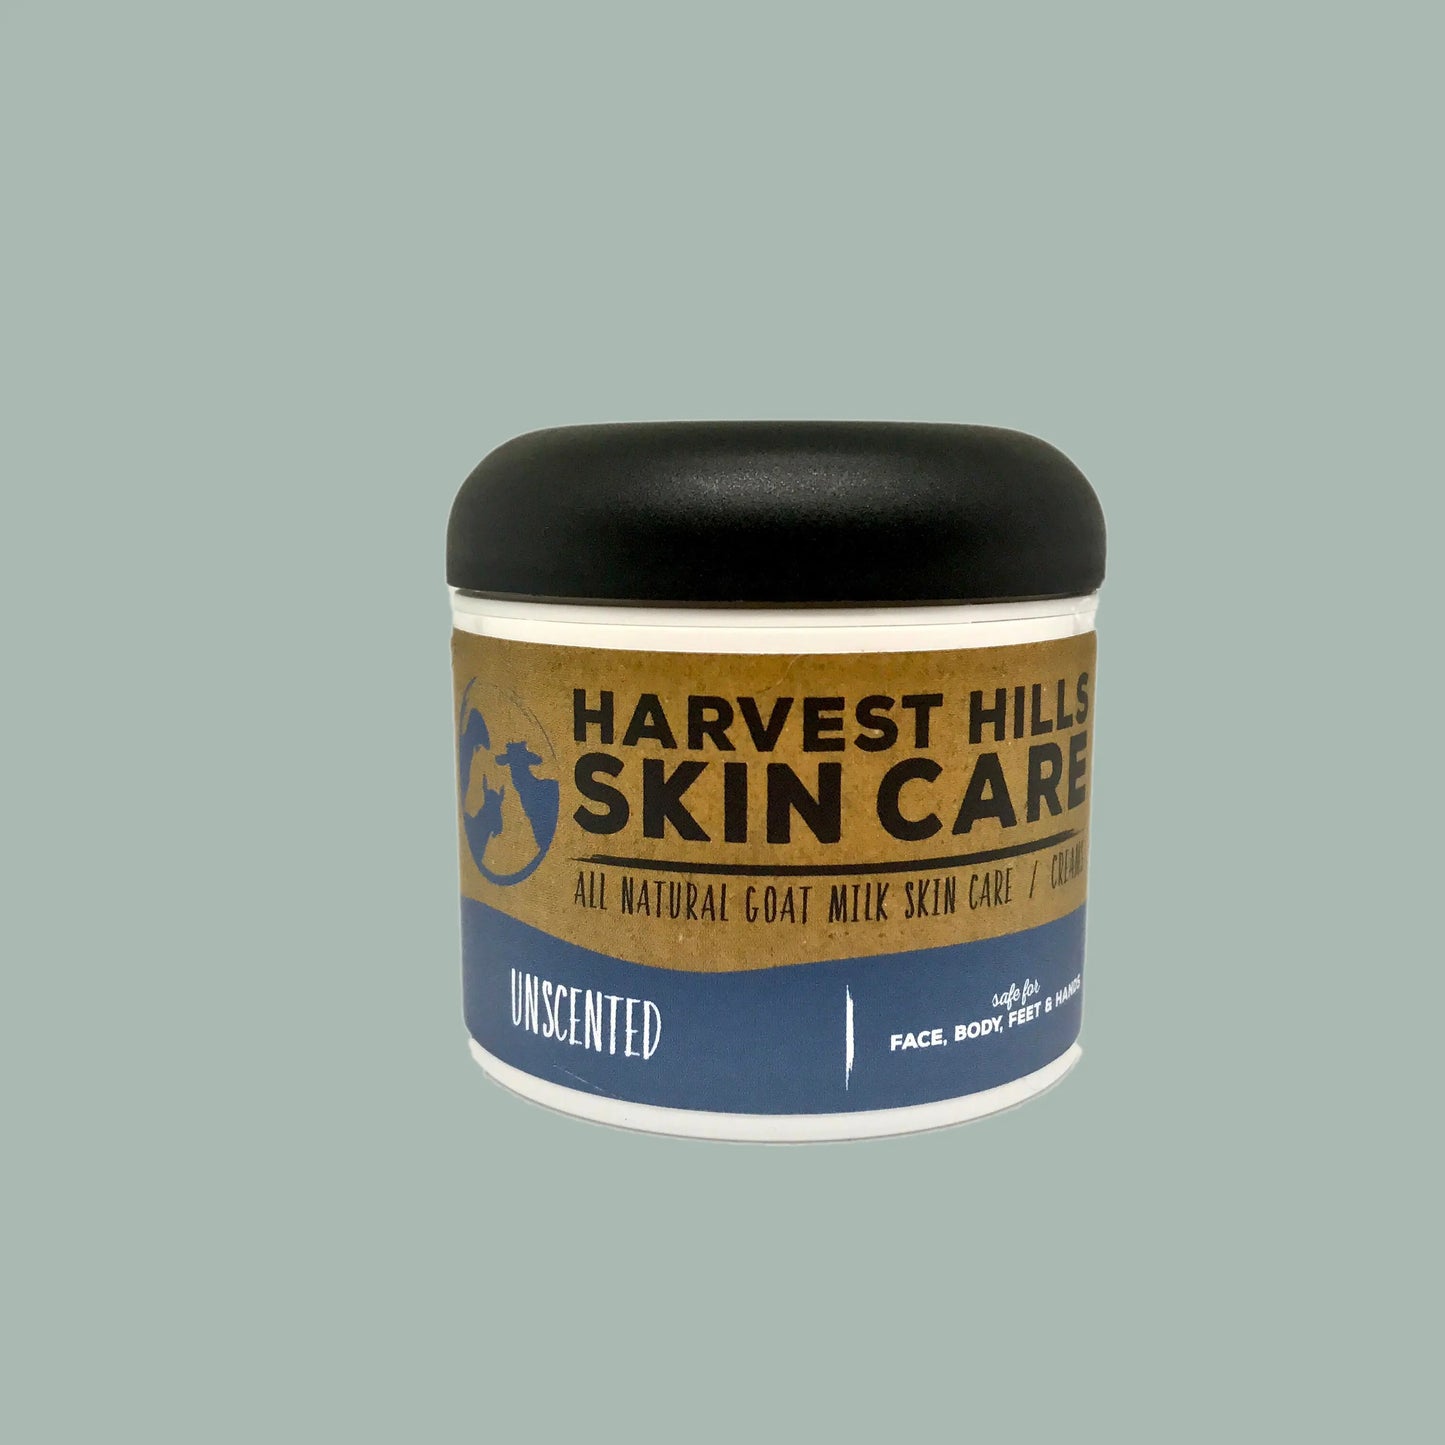 Unscented Intense Moisturizer - Refill available Harvest Hills Skin Care All Natural Goat Milk Skin Care